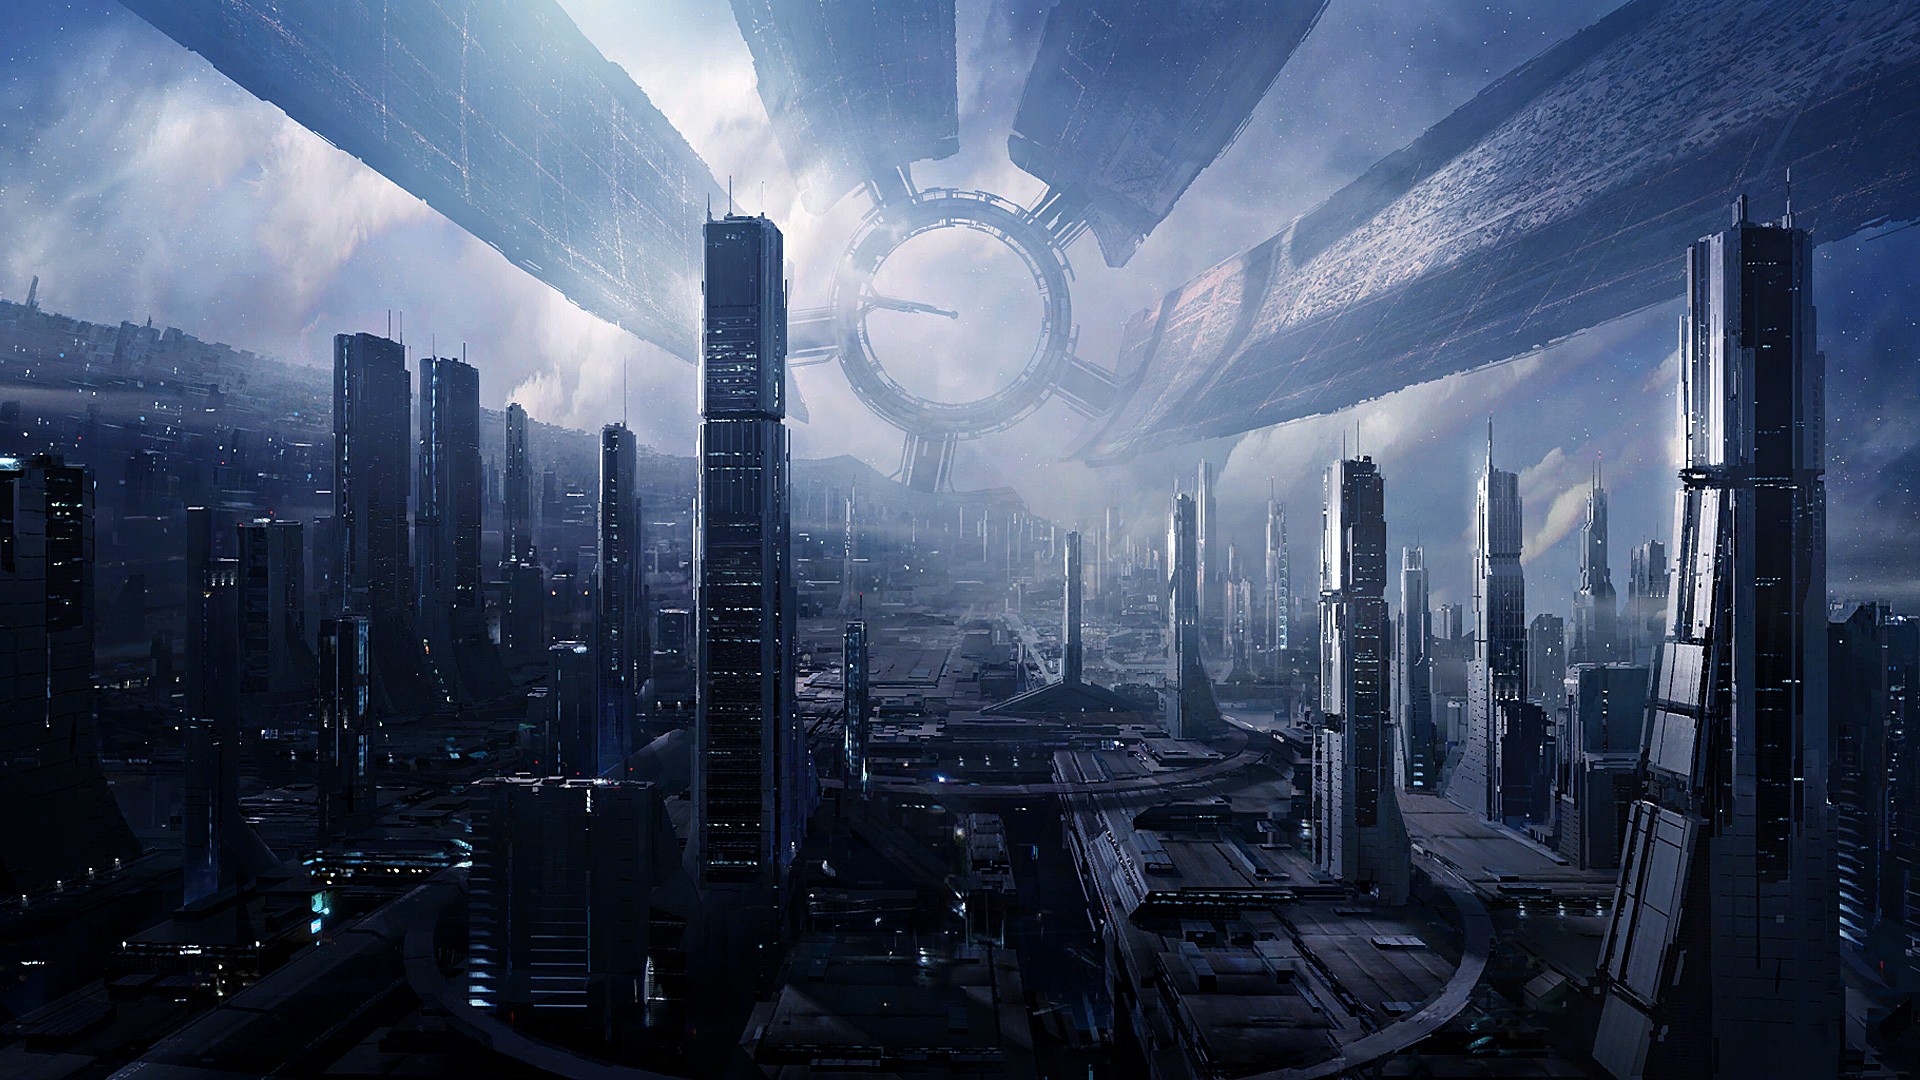 Futuristic Mass Effect Citadel Space Nebula Space Station Cityscape Skyscraper Digital Art Citadel M 1920x1080